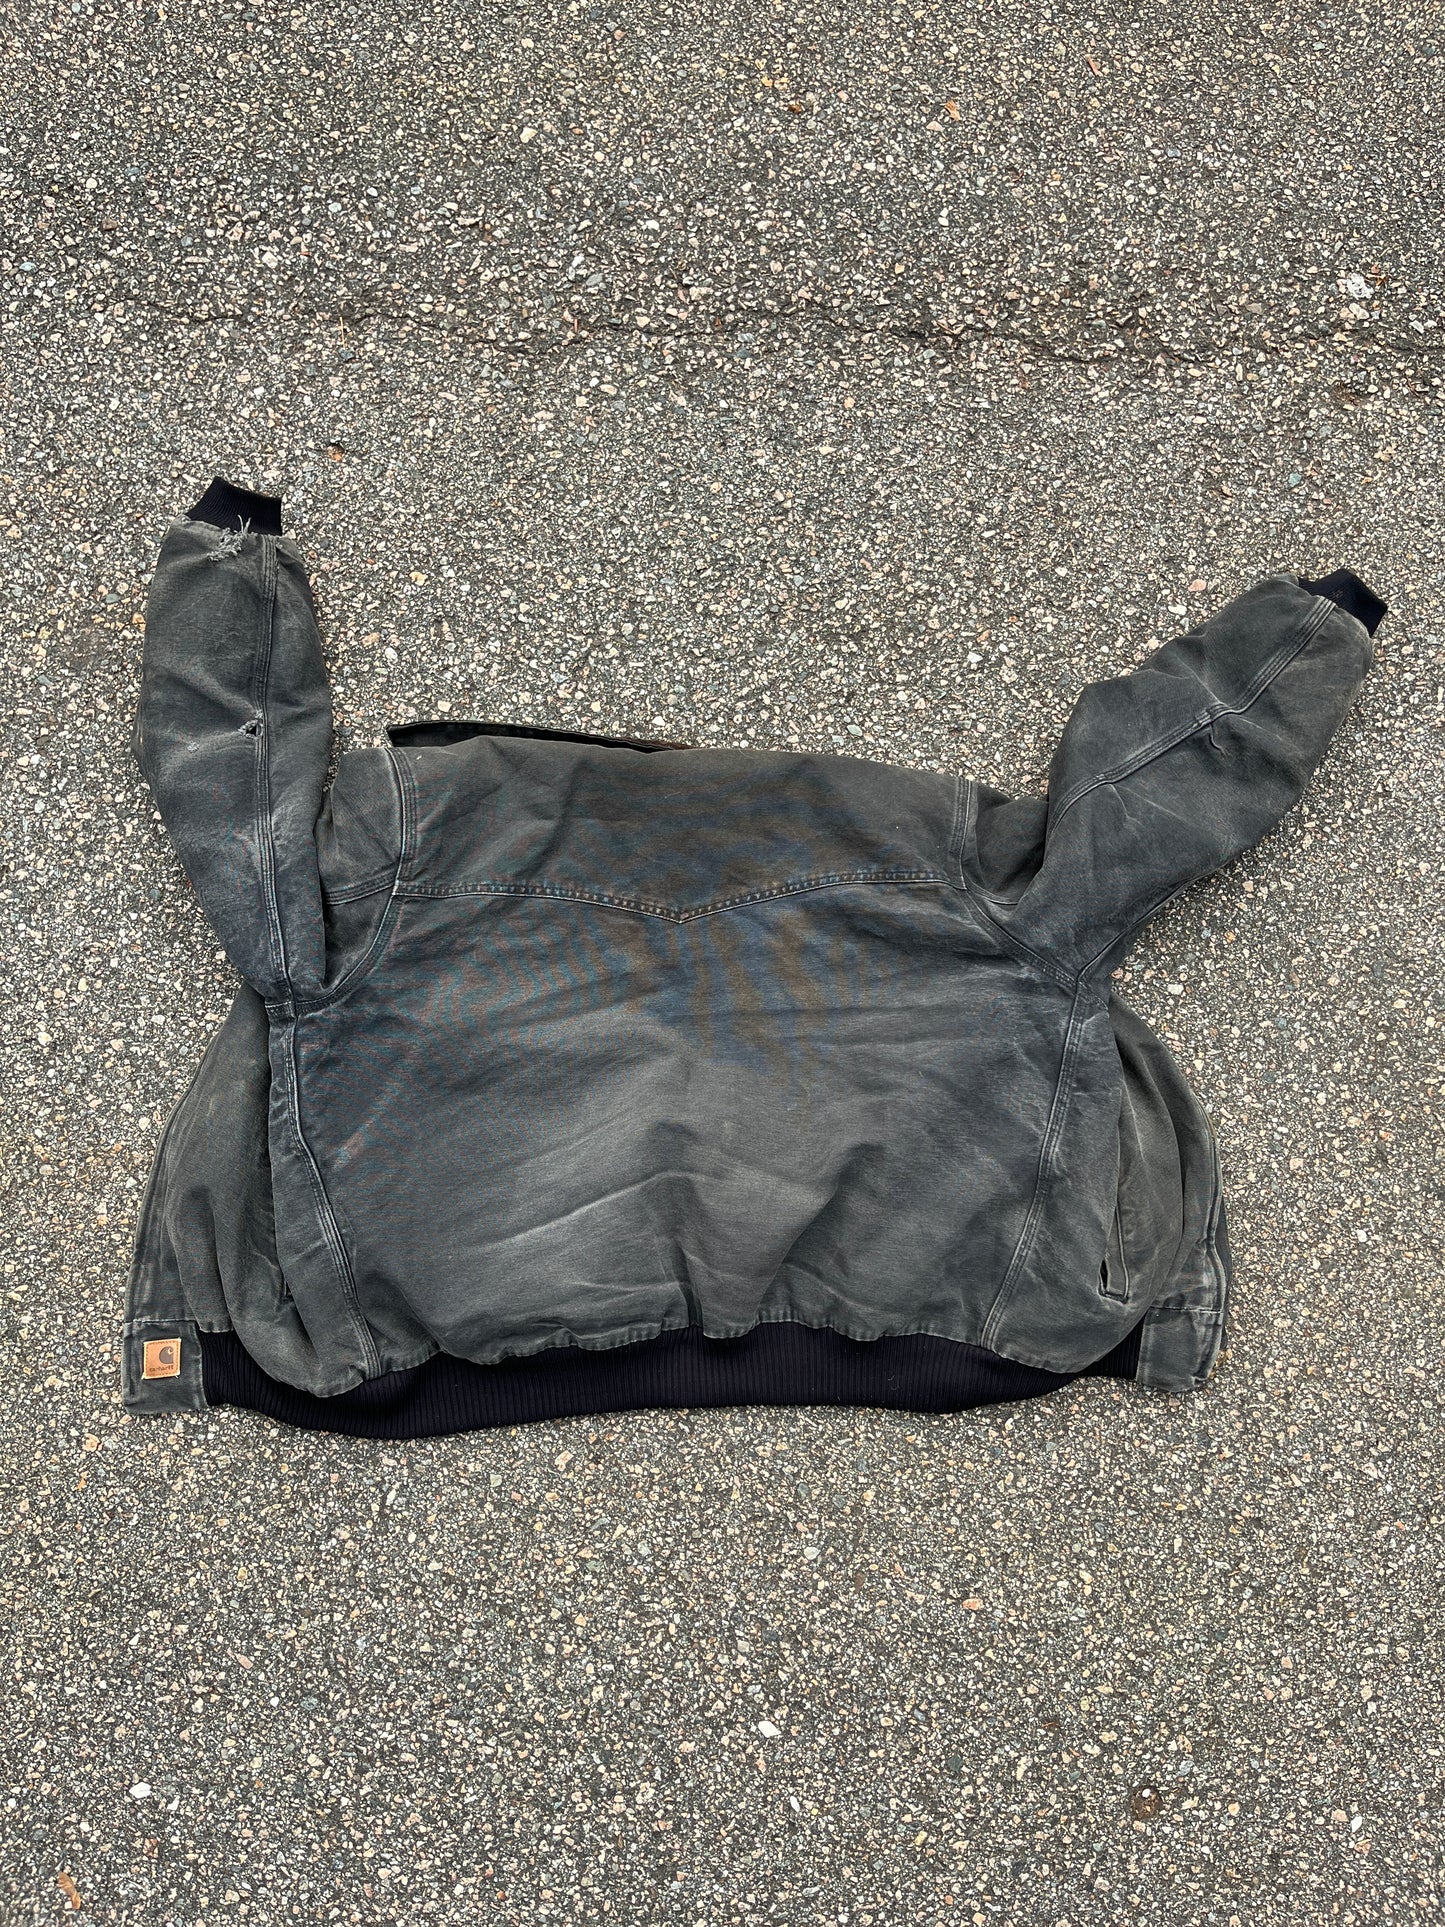 Faded Black Carhartt Santa Fe Jacket - XL